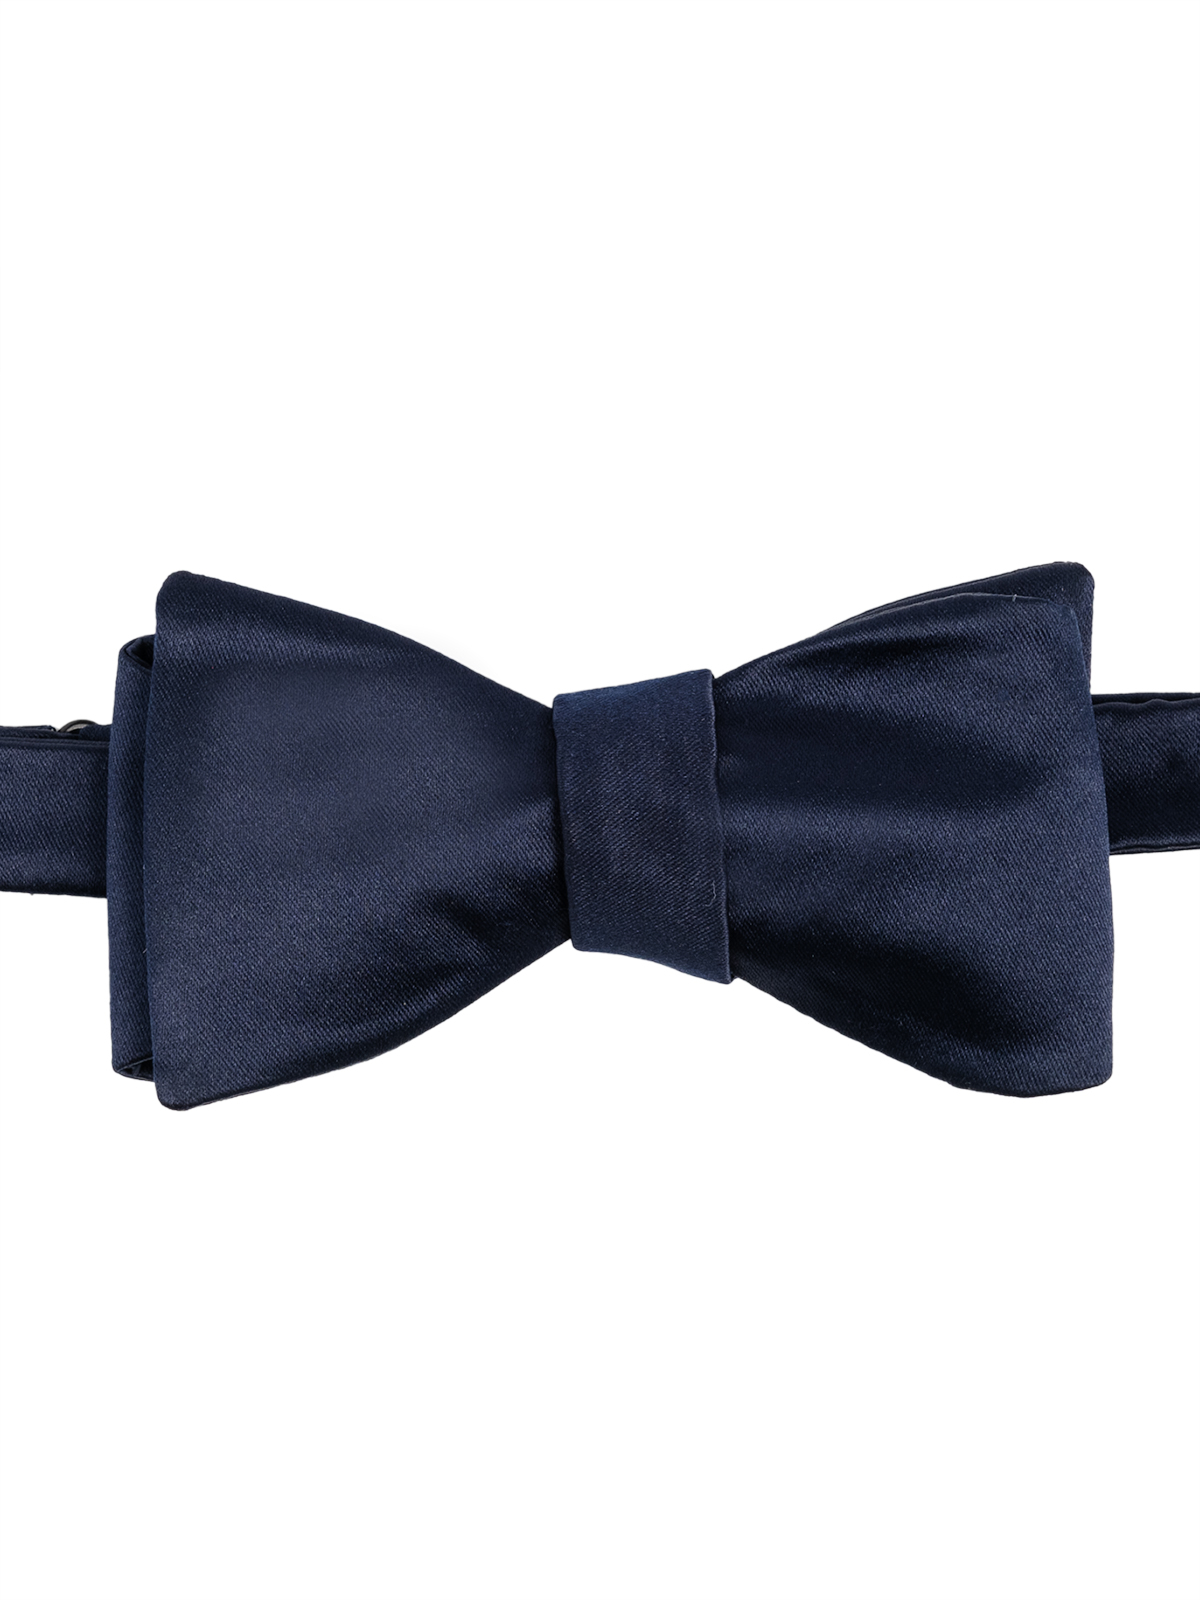 Men's Solid Satin Bow Tie